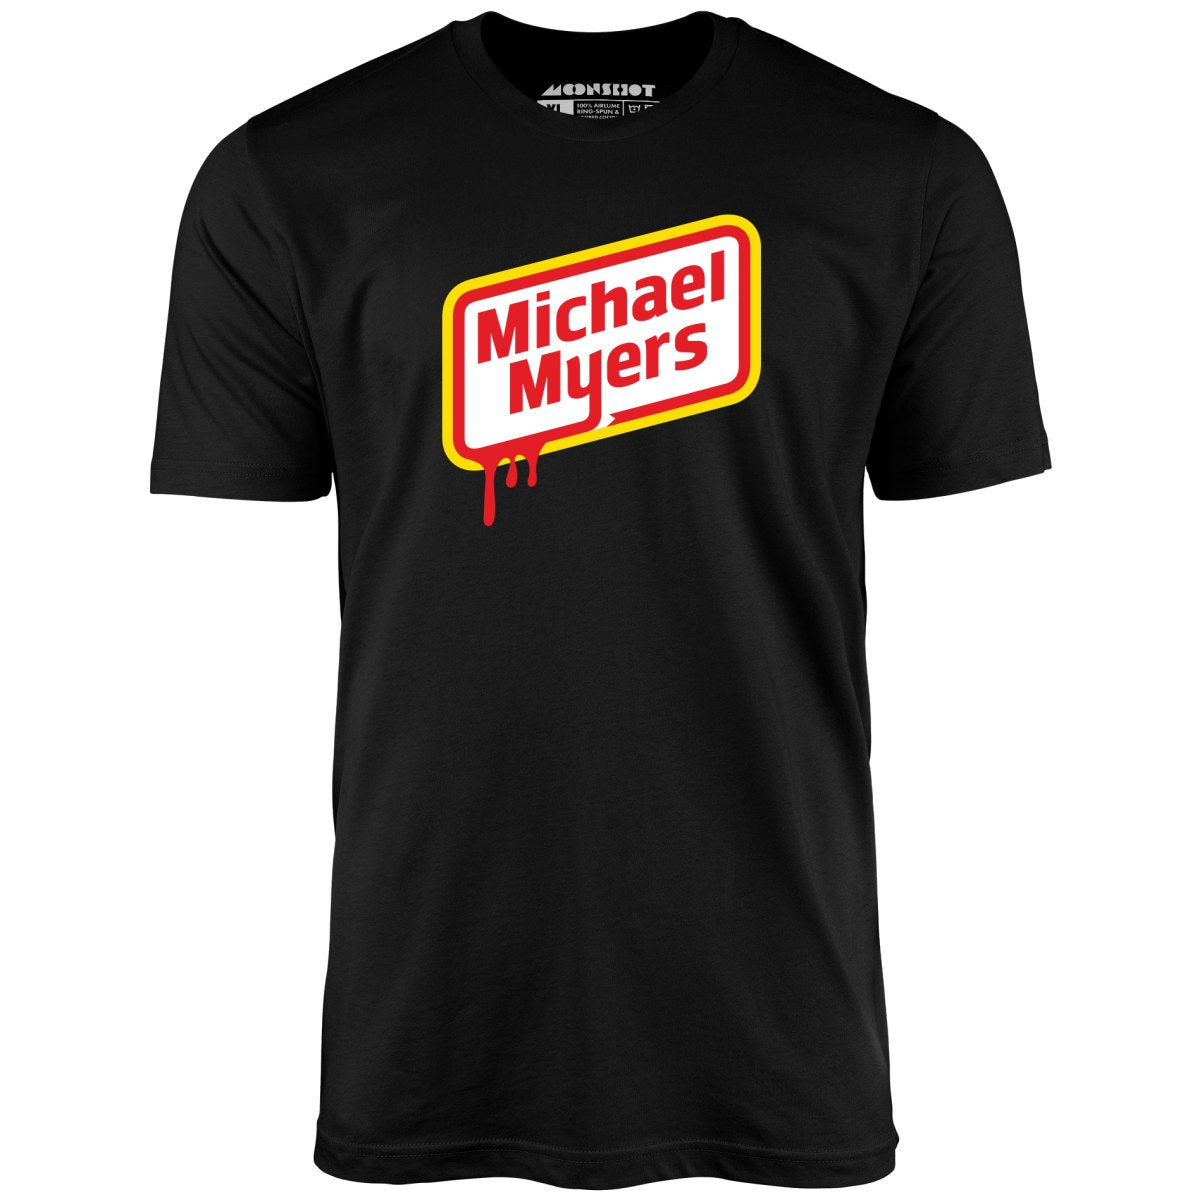 Michael Myers - Unisex T-Shirt